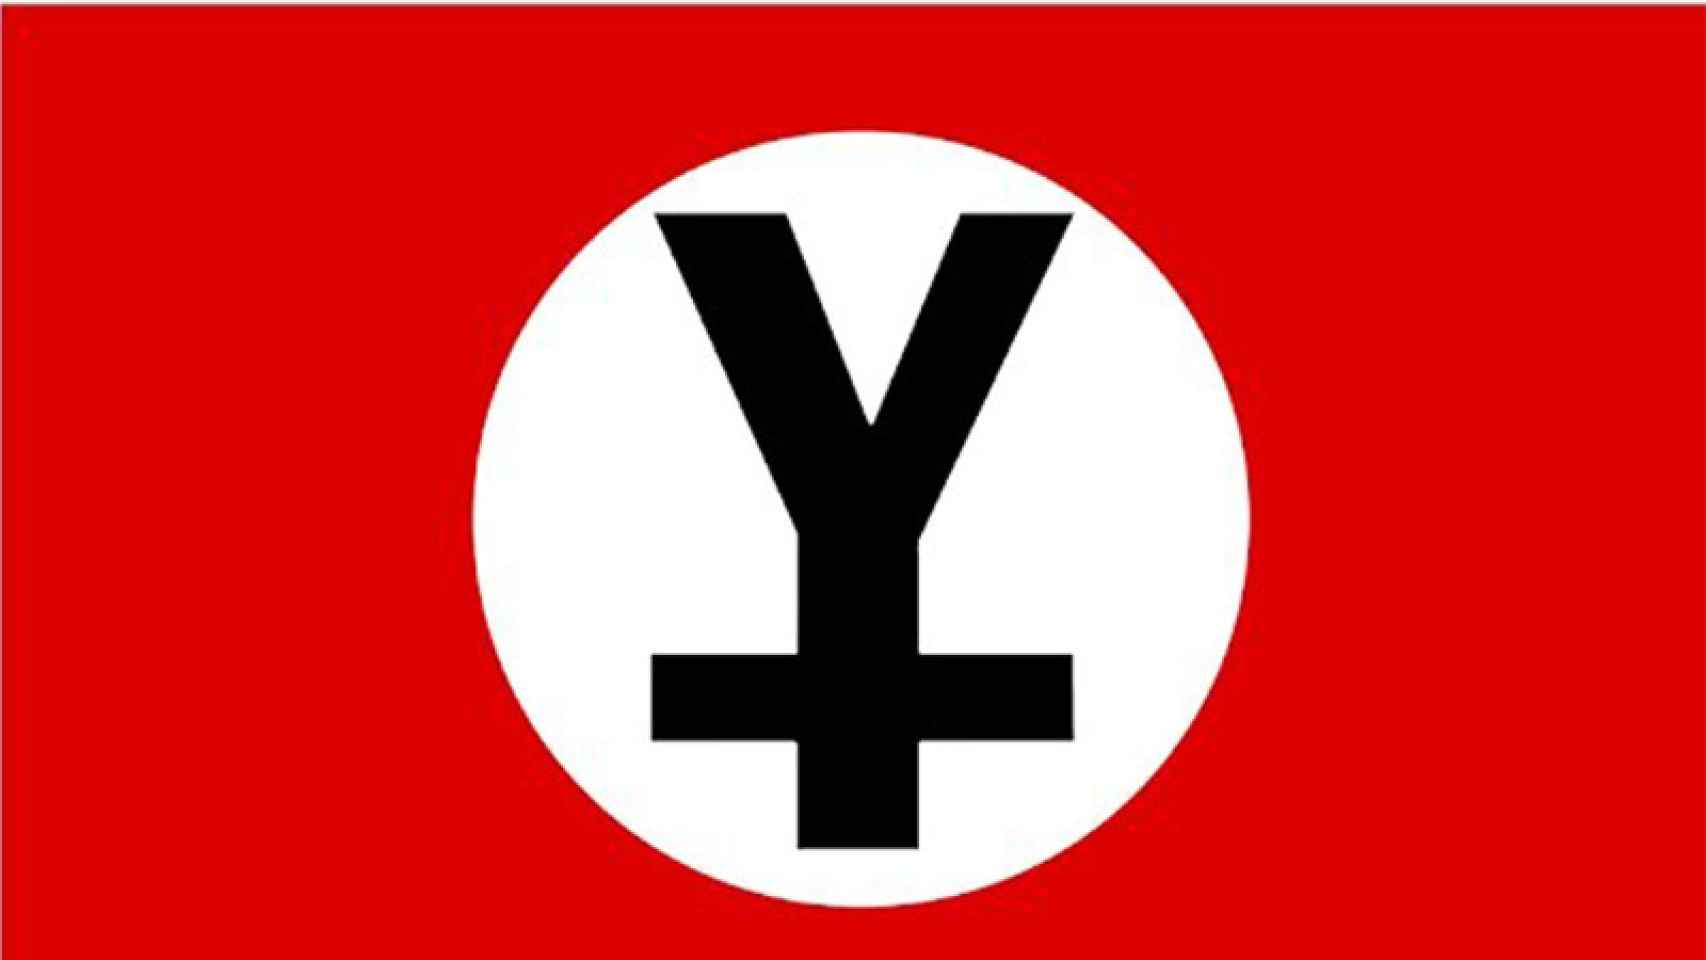 La bandera de El Yunque se asemeja a la de la Alemania nazi.